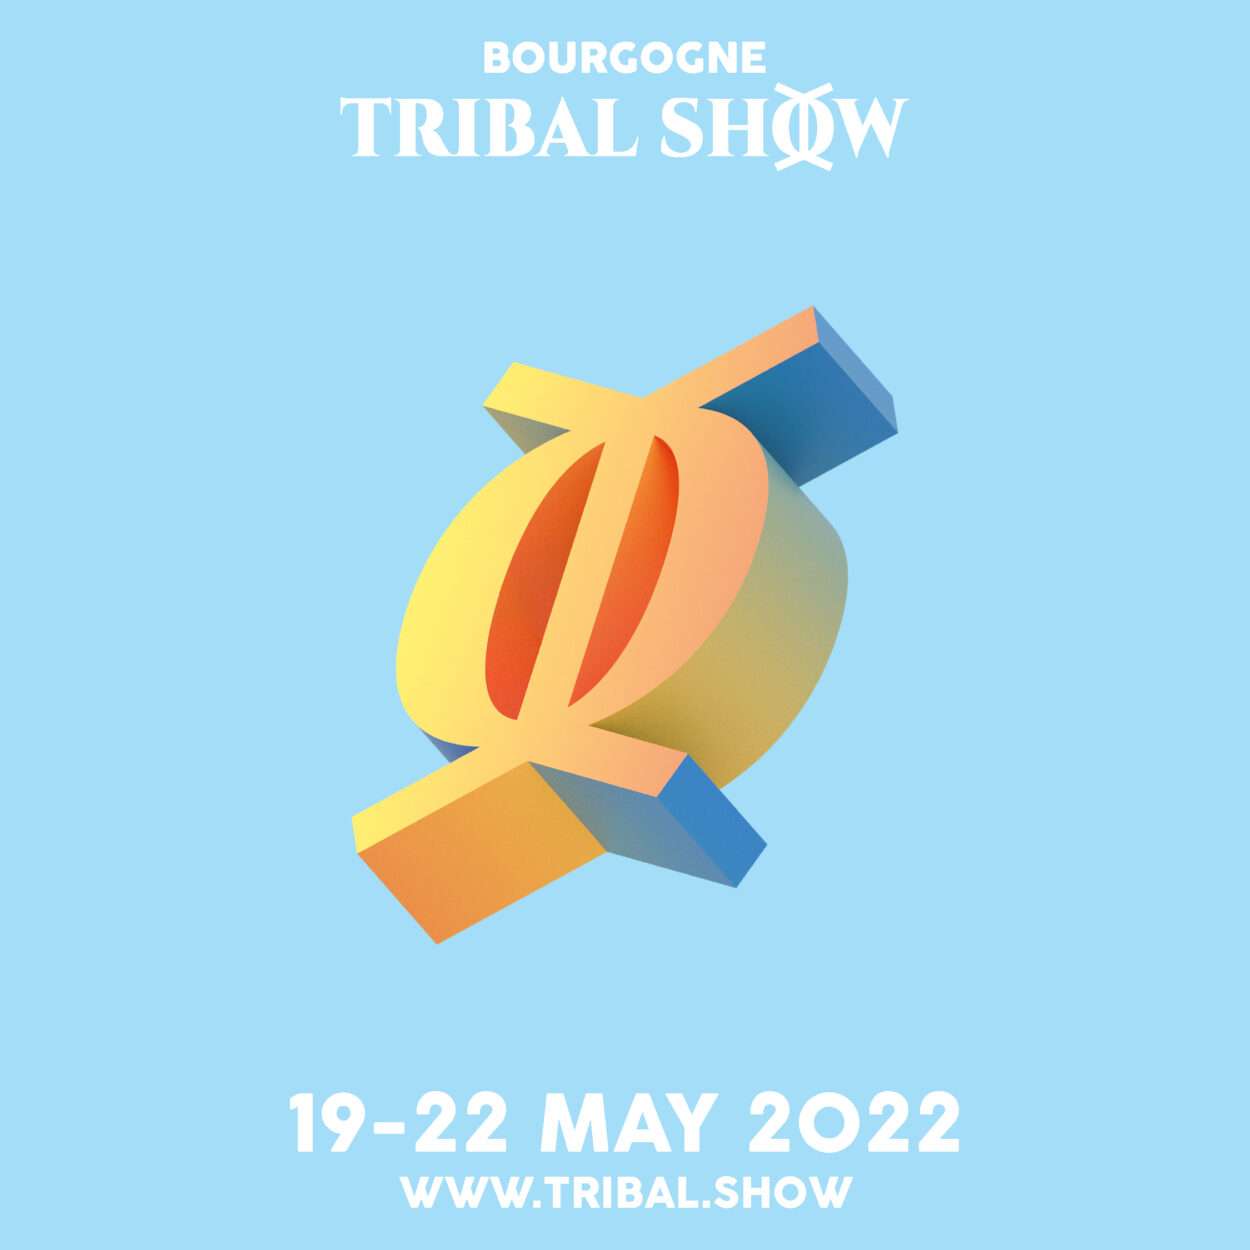 Burgundy Tribal Show 2022